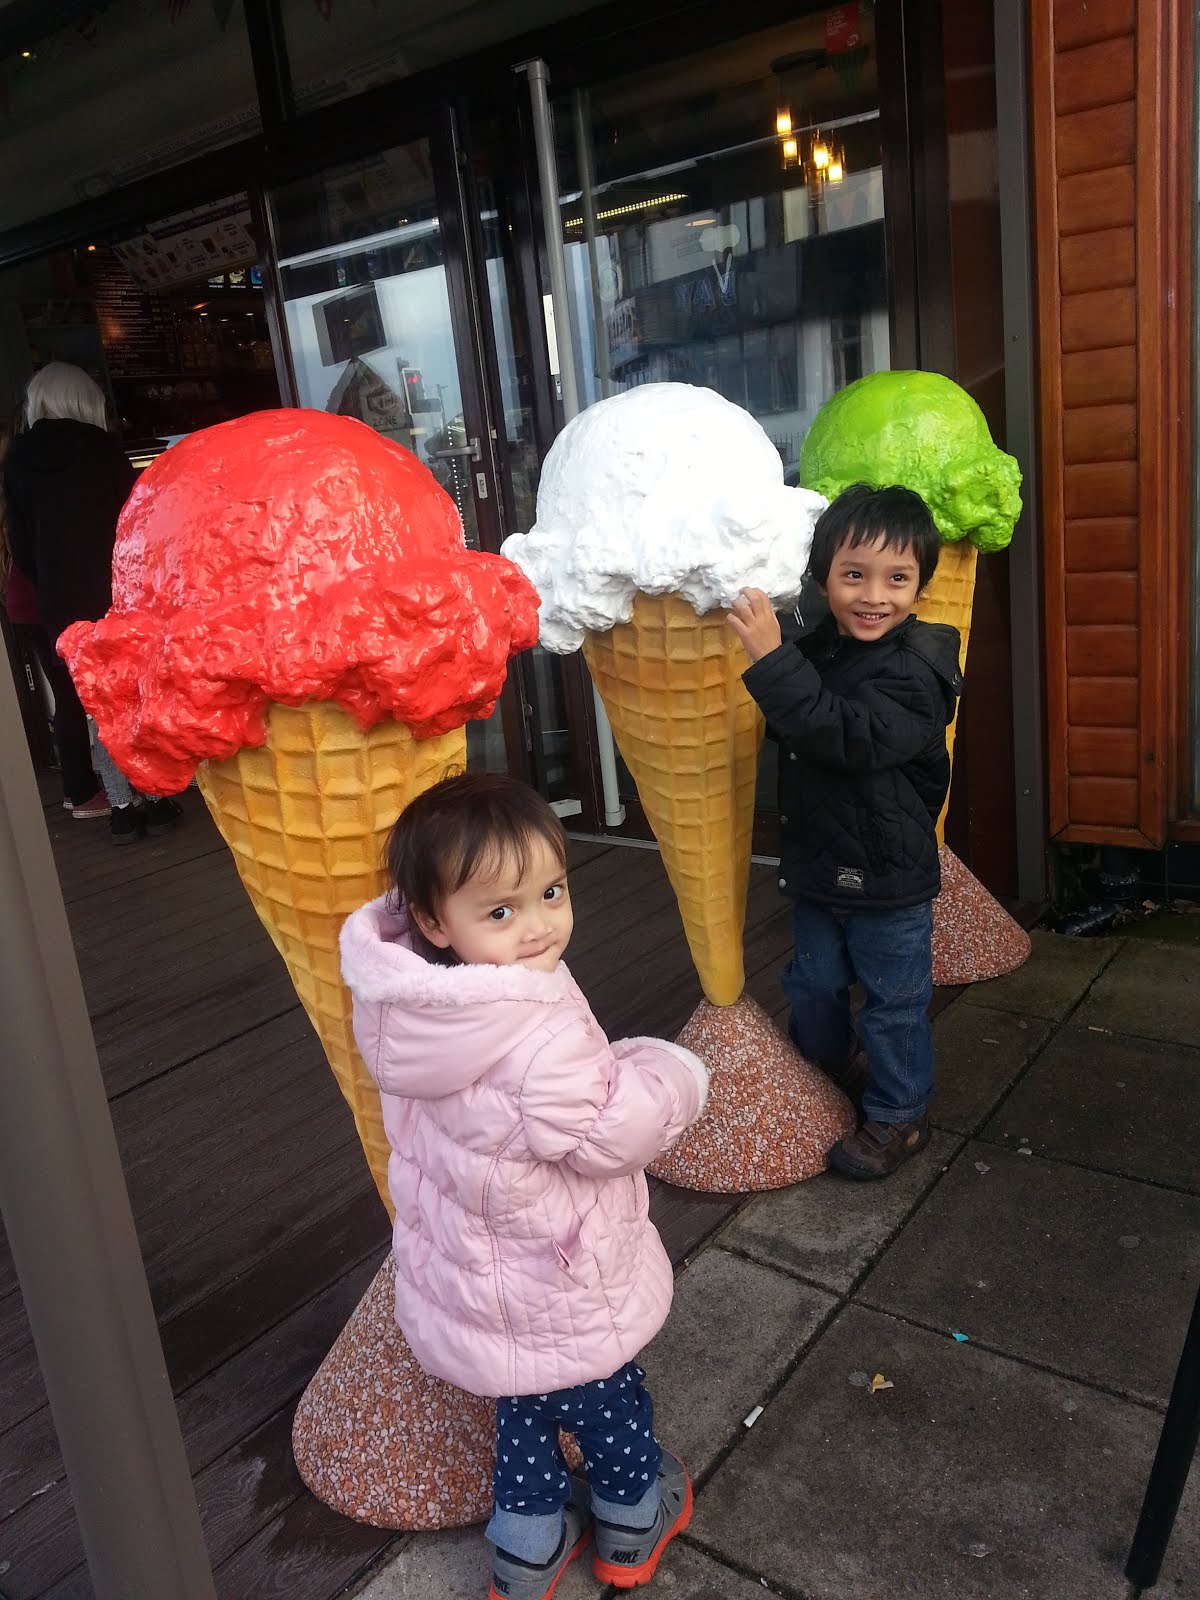 Amar and Hani with big ice creams